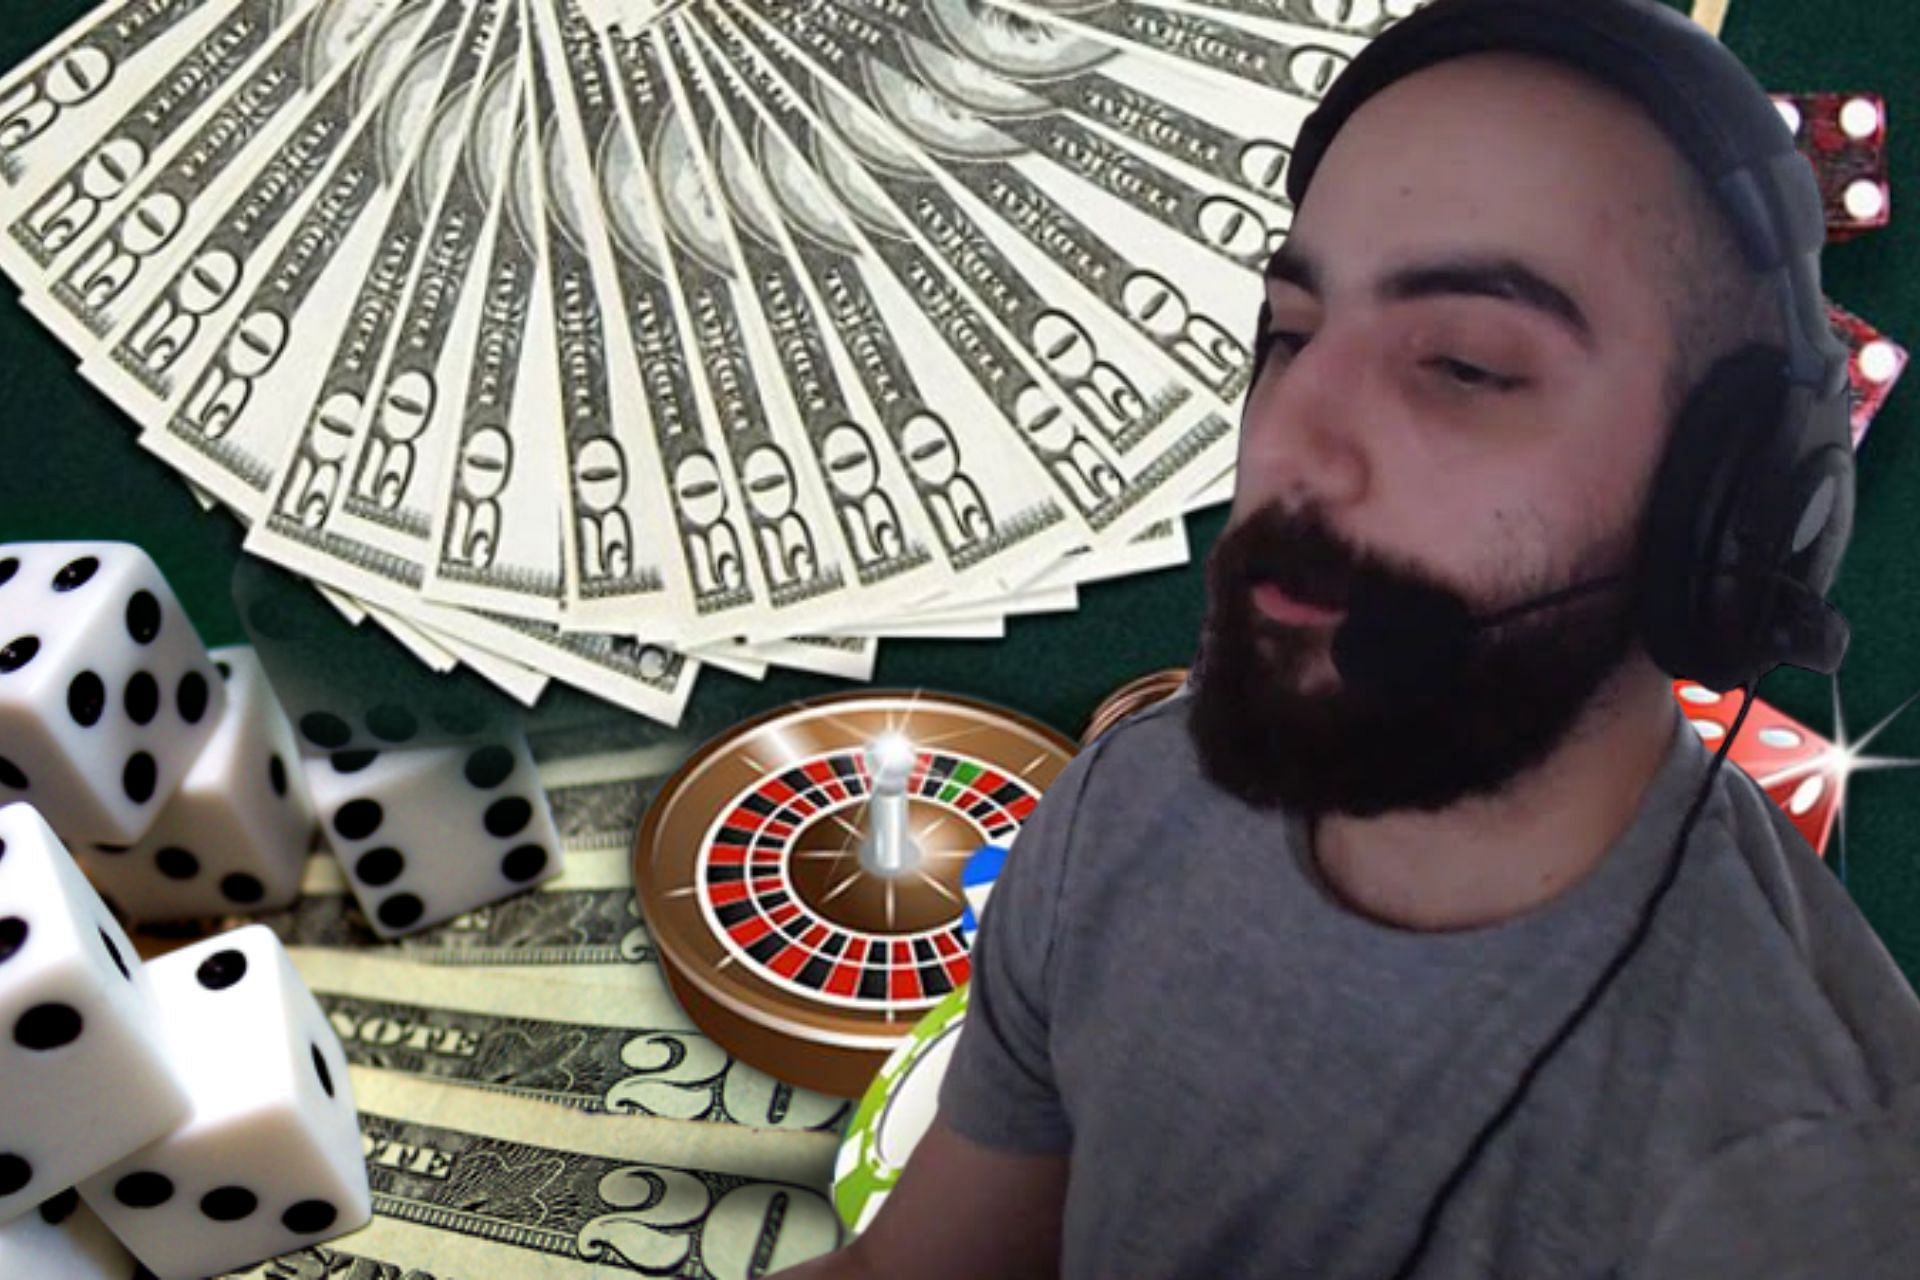 Twitch streamer Sliker admits to $200,000 gambling scam